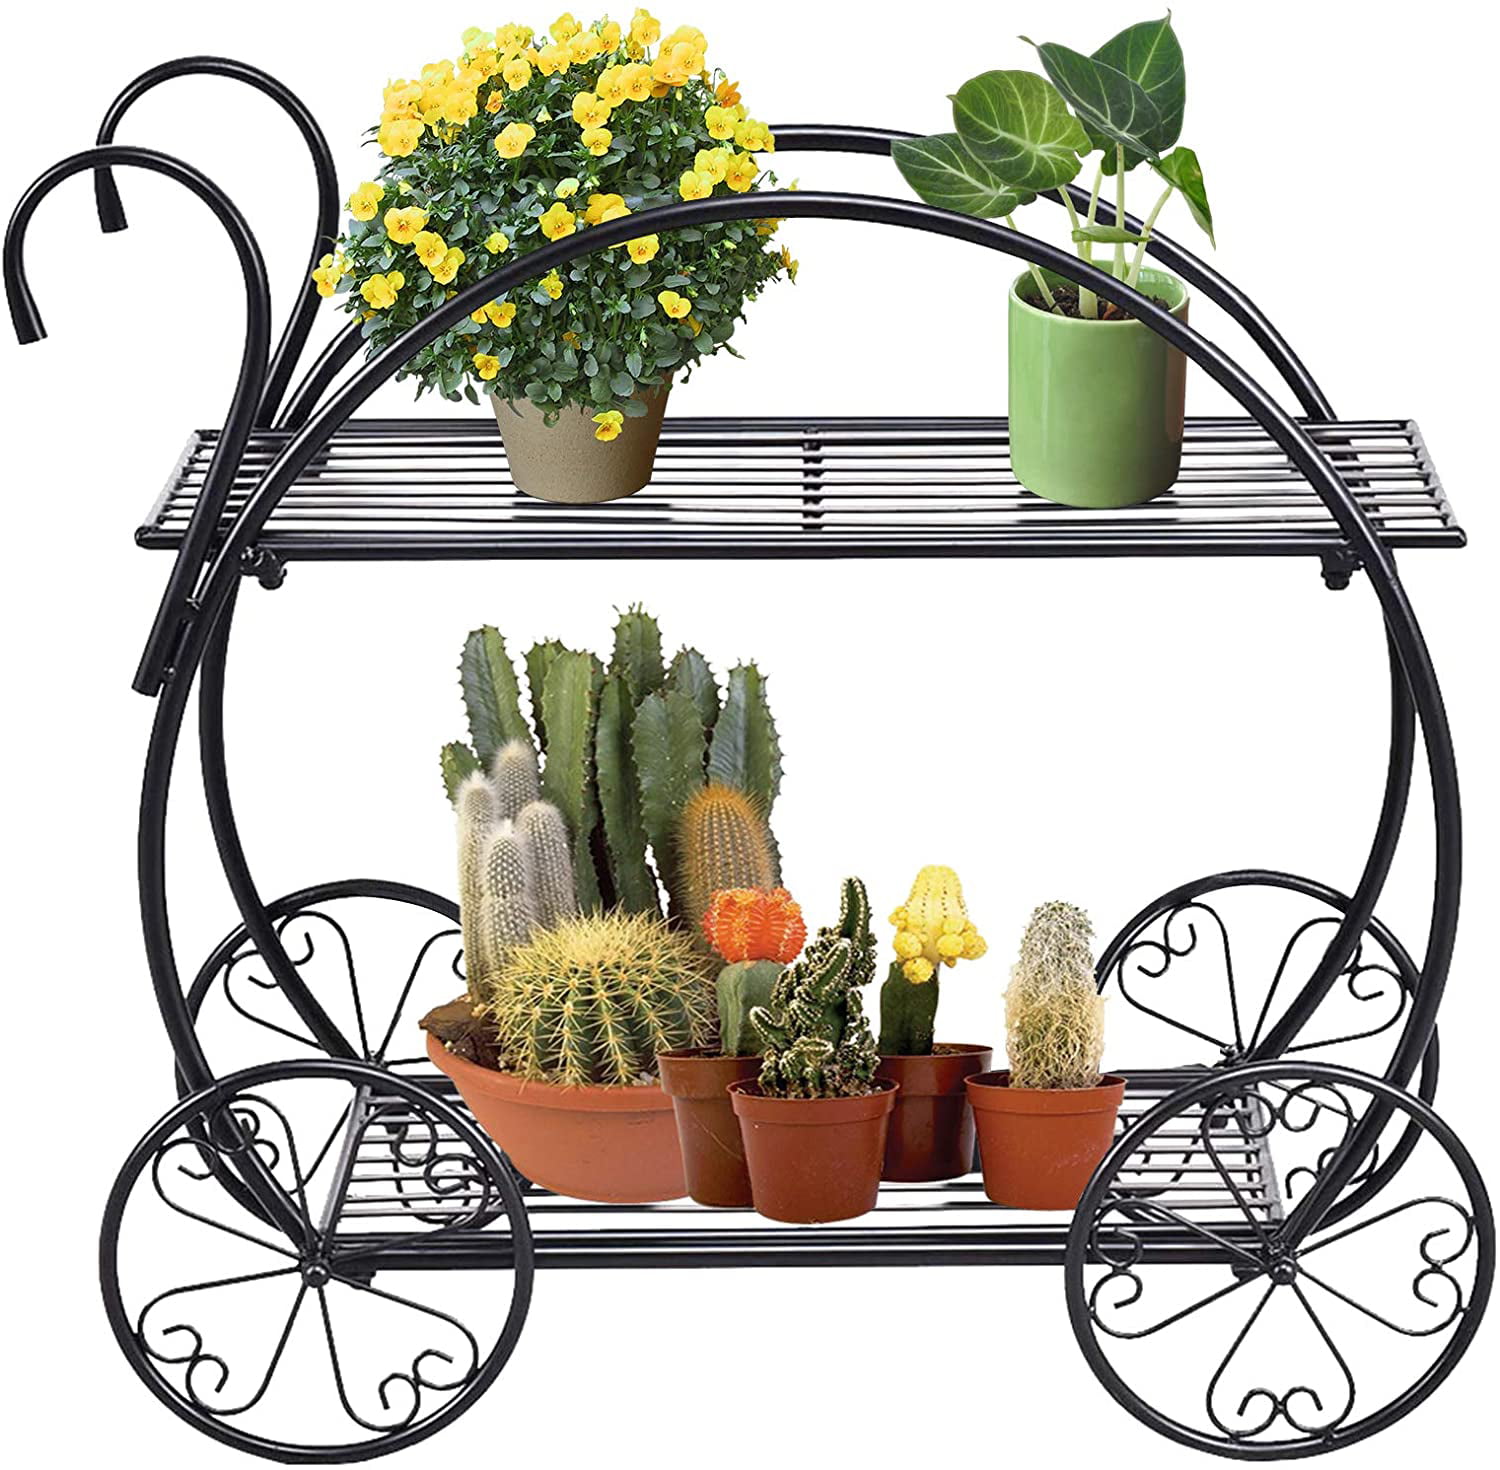 Flower Succulent Plant Pot Stand Metal Rack Garden Display Shelf Holder Decor